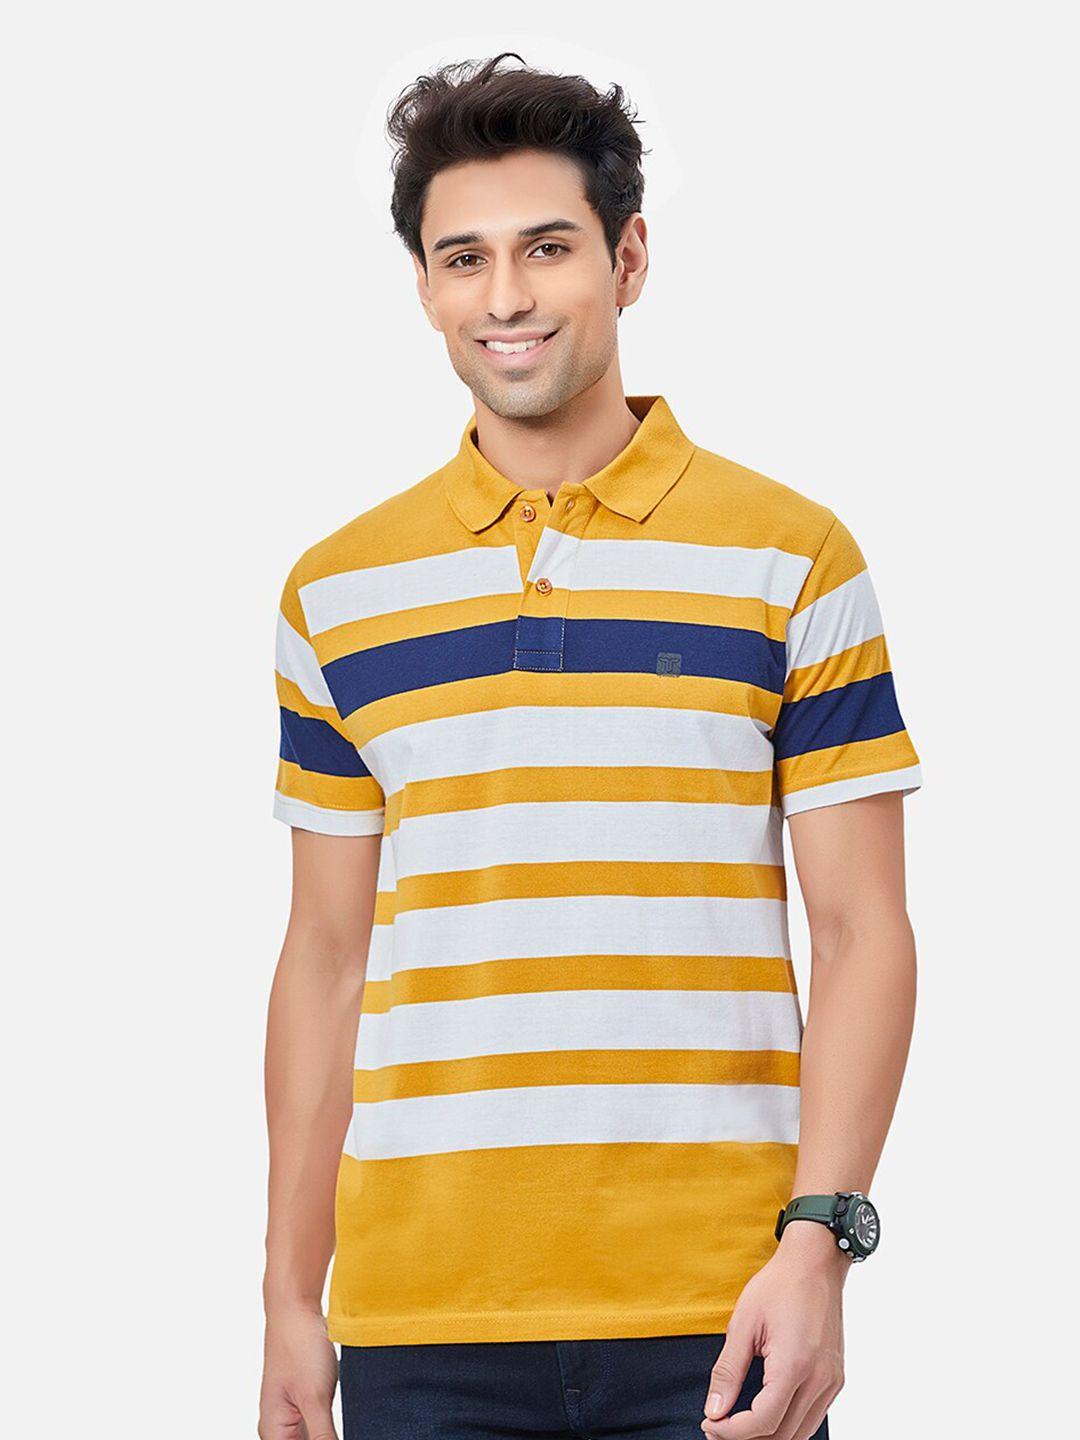 tessio men yellow striped pockets t-shirt